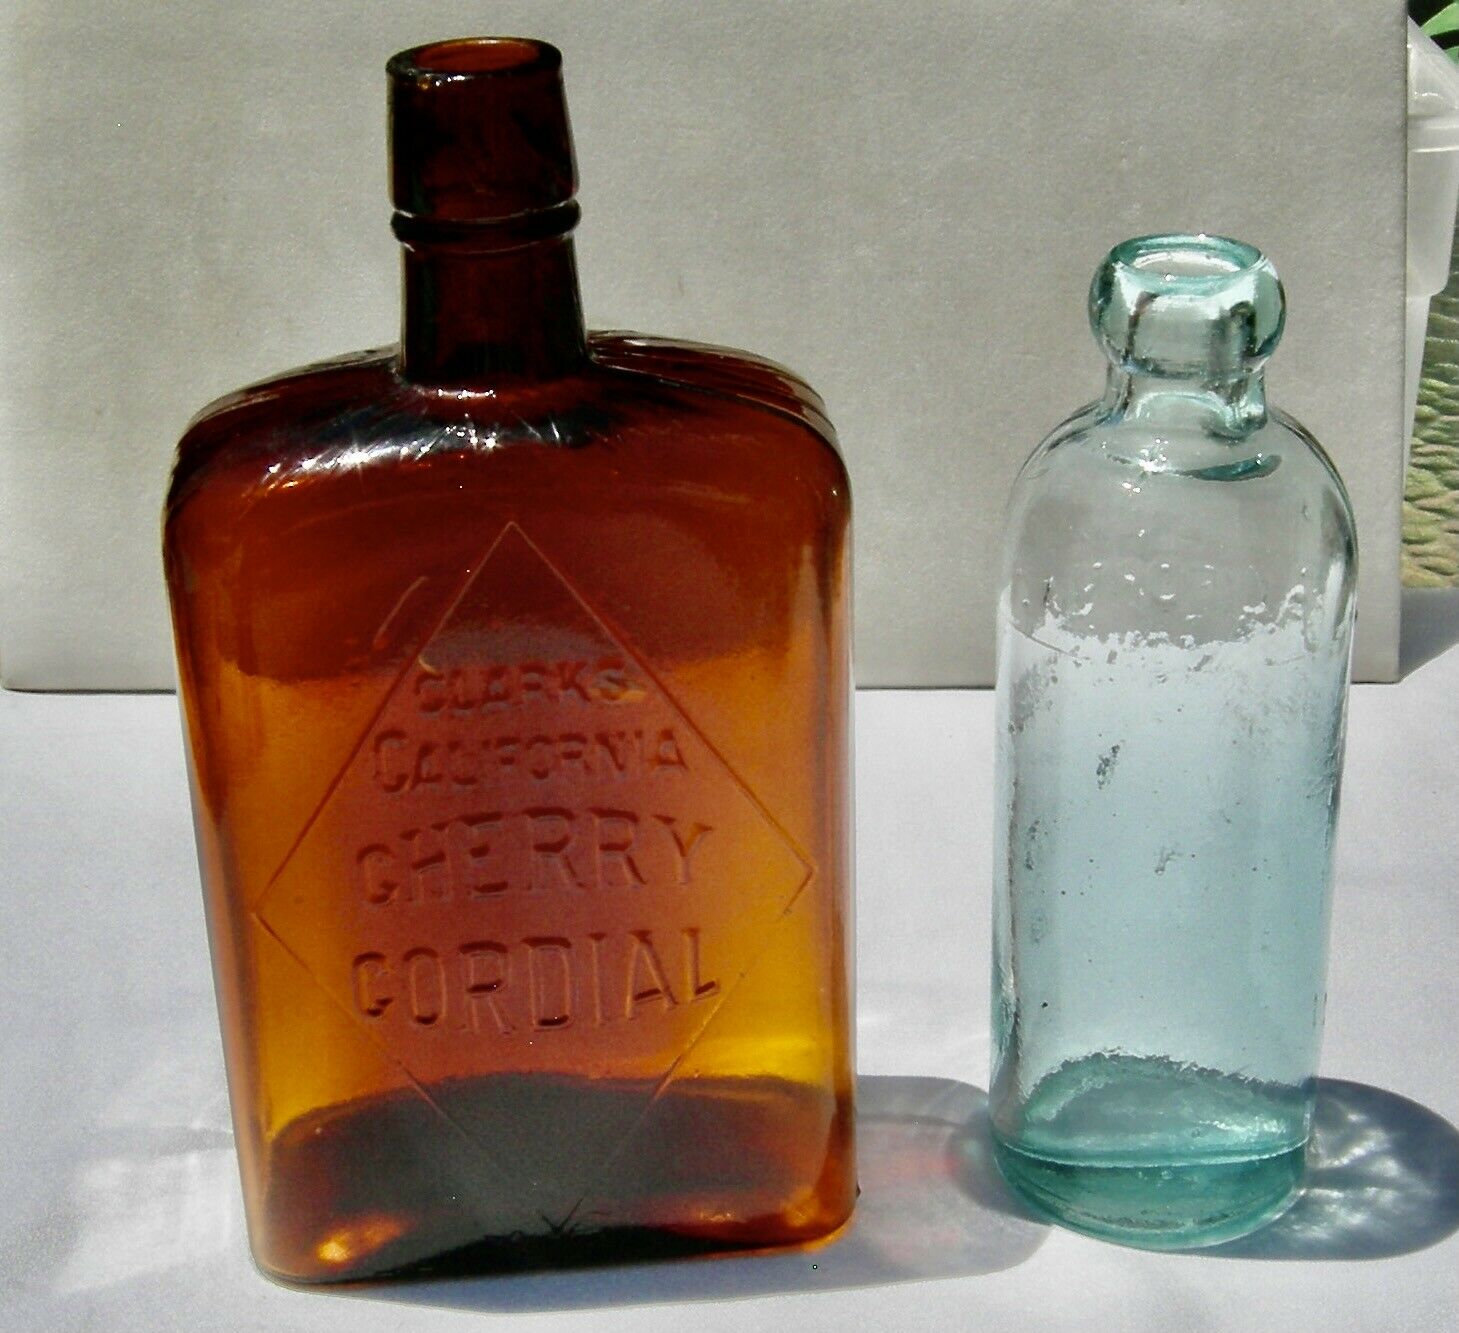 Ca 1890s "clarks California Cherry Cordial" Western Reddish Amber Liquor Bottle